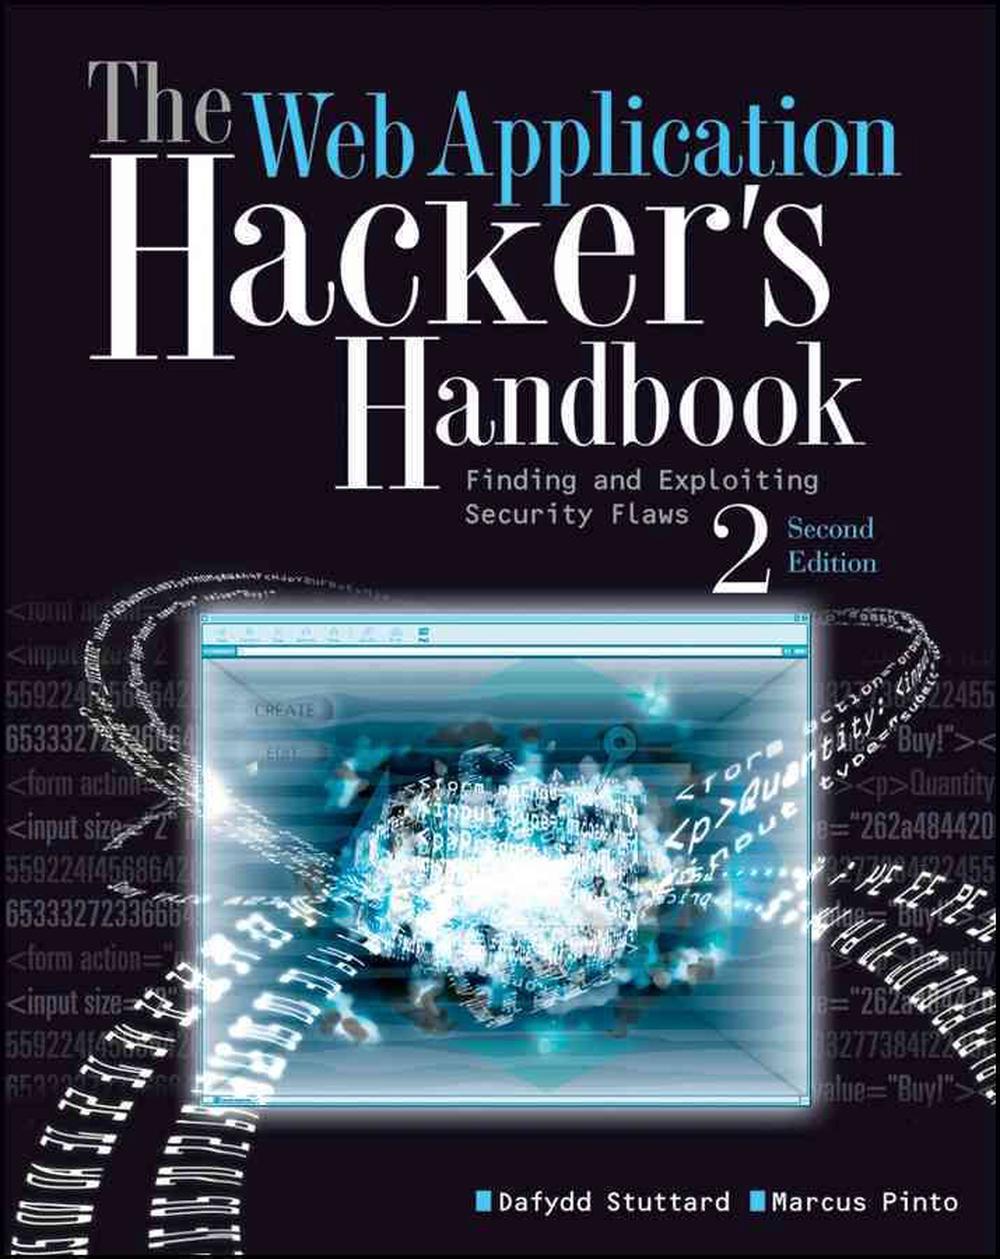 The Web Application Hacker's Handbook by Dafydd Stuttard, Paperback